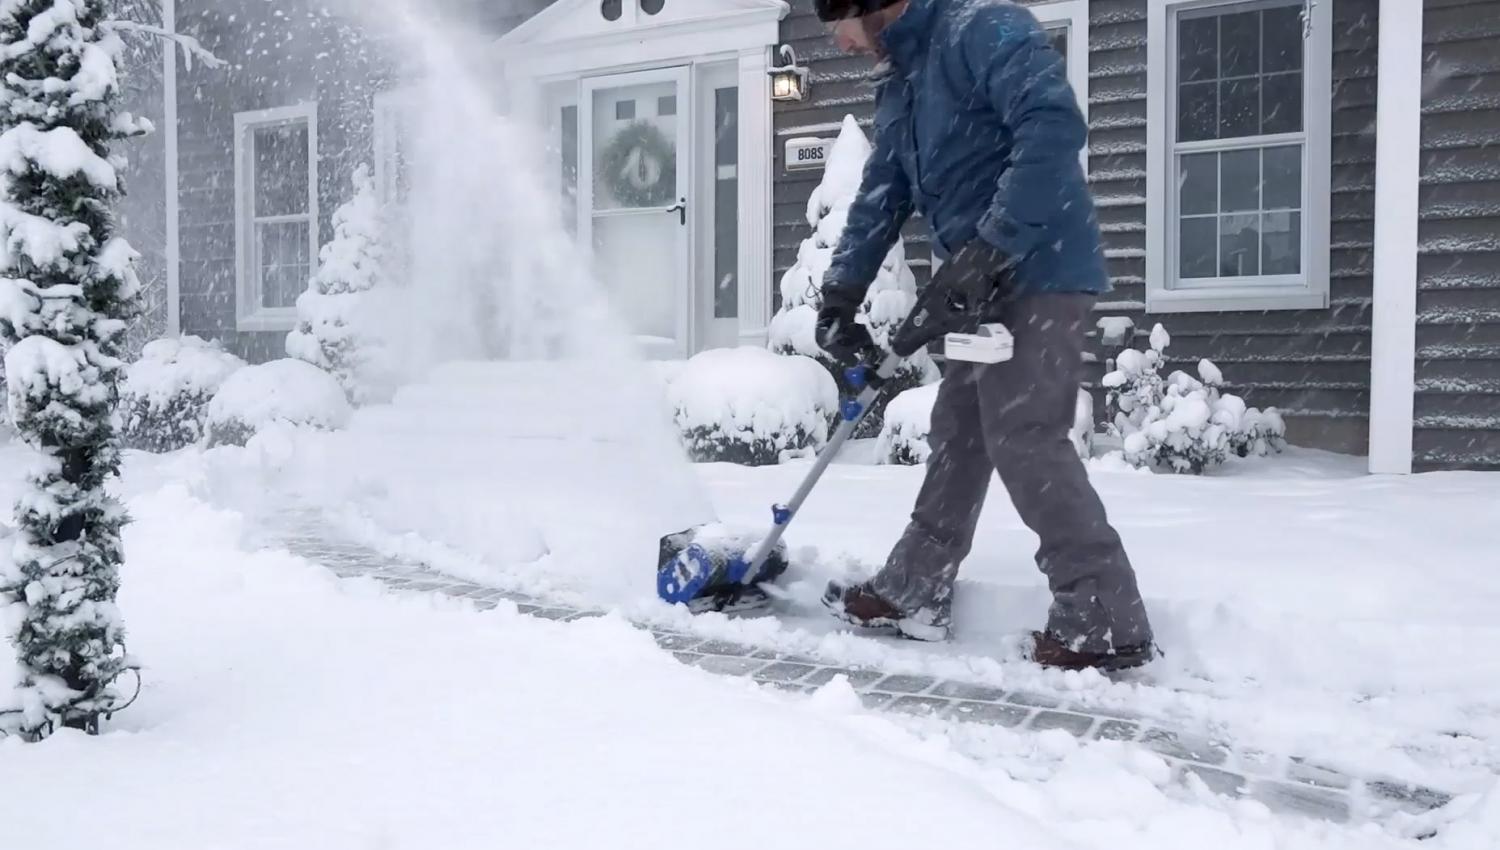 Snow Joe Rechargeable Electric Snow Shovel - Cordless electronic shovel